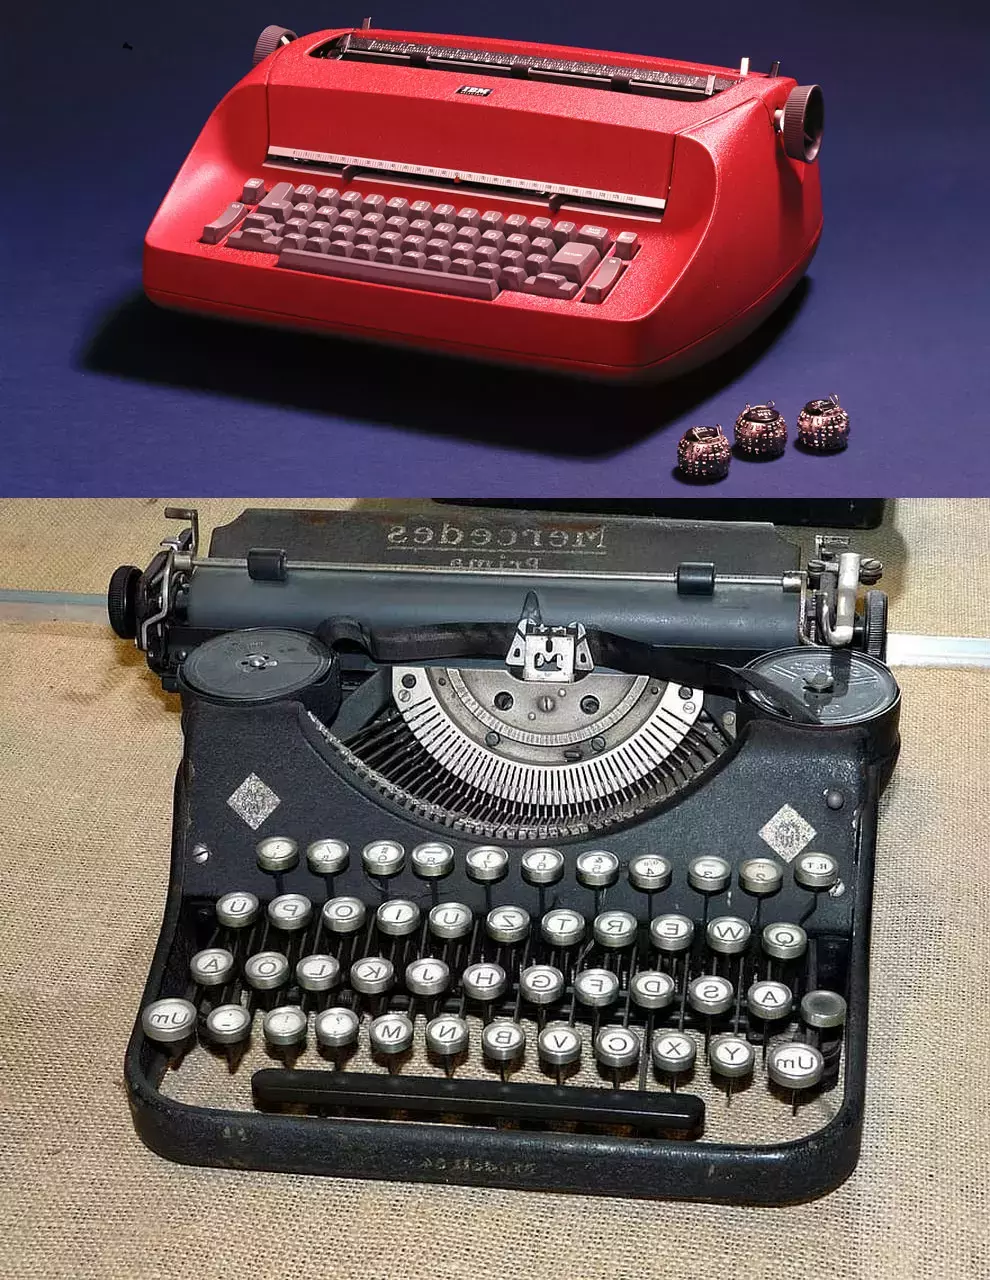 IBM Selectric打字机与苏联大使馆使用的机械打字机相比较。